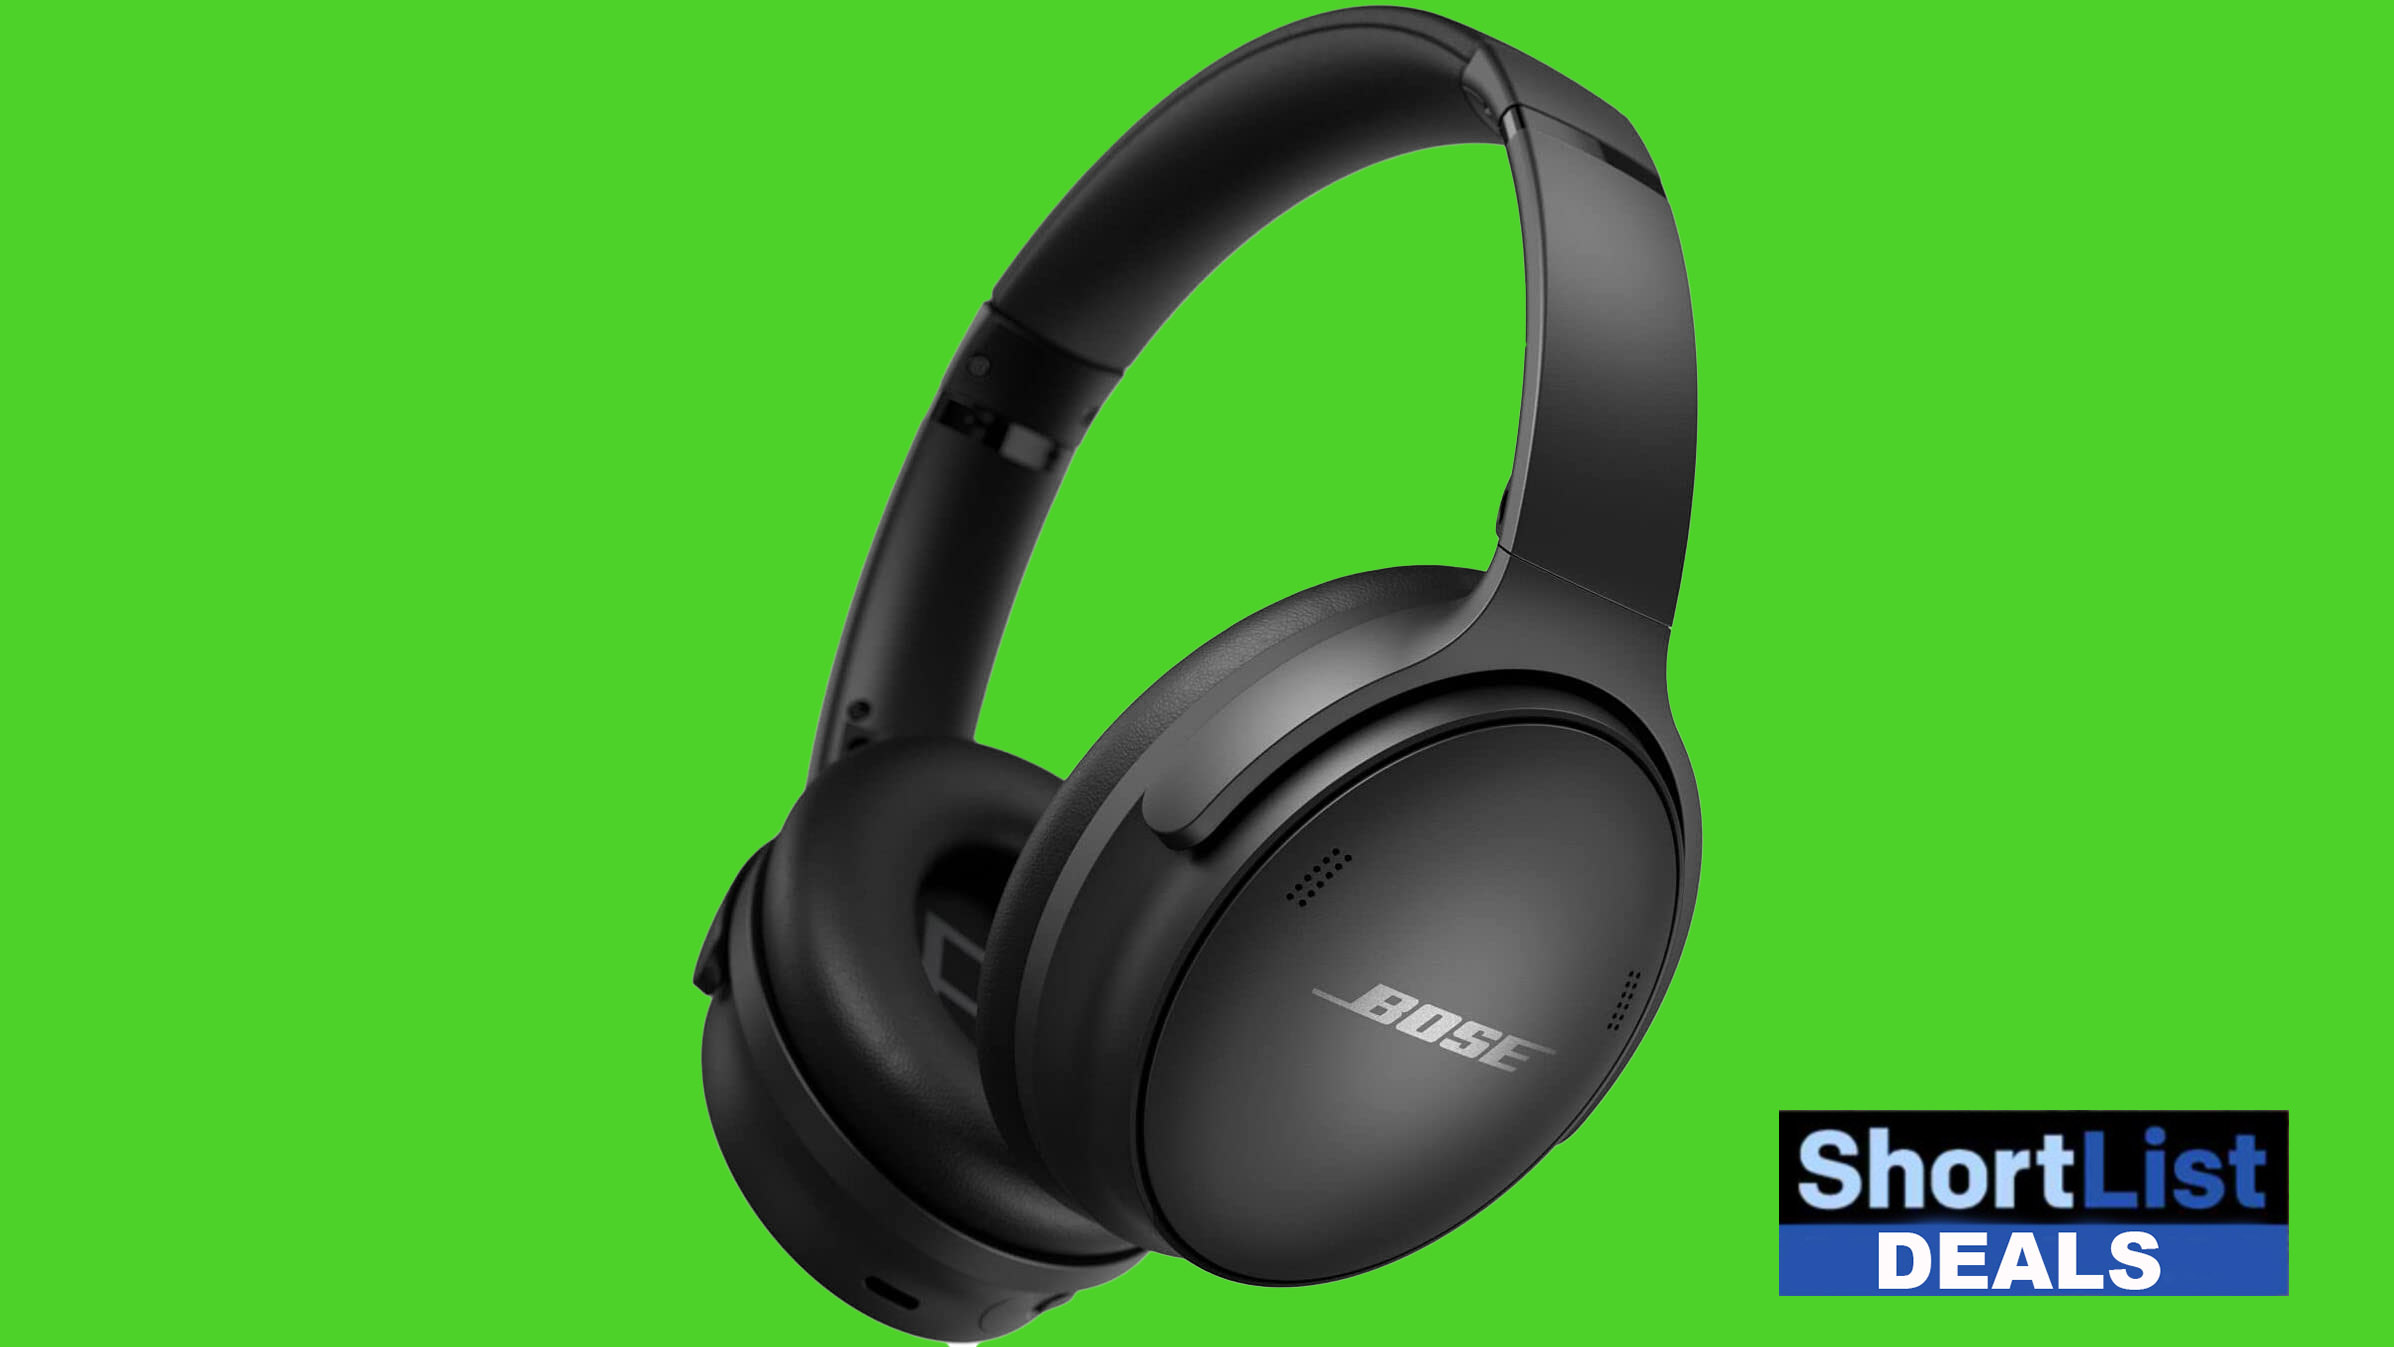 These Bose QuietComfort SE headphones are a sub-£200 Black Friday